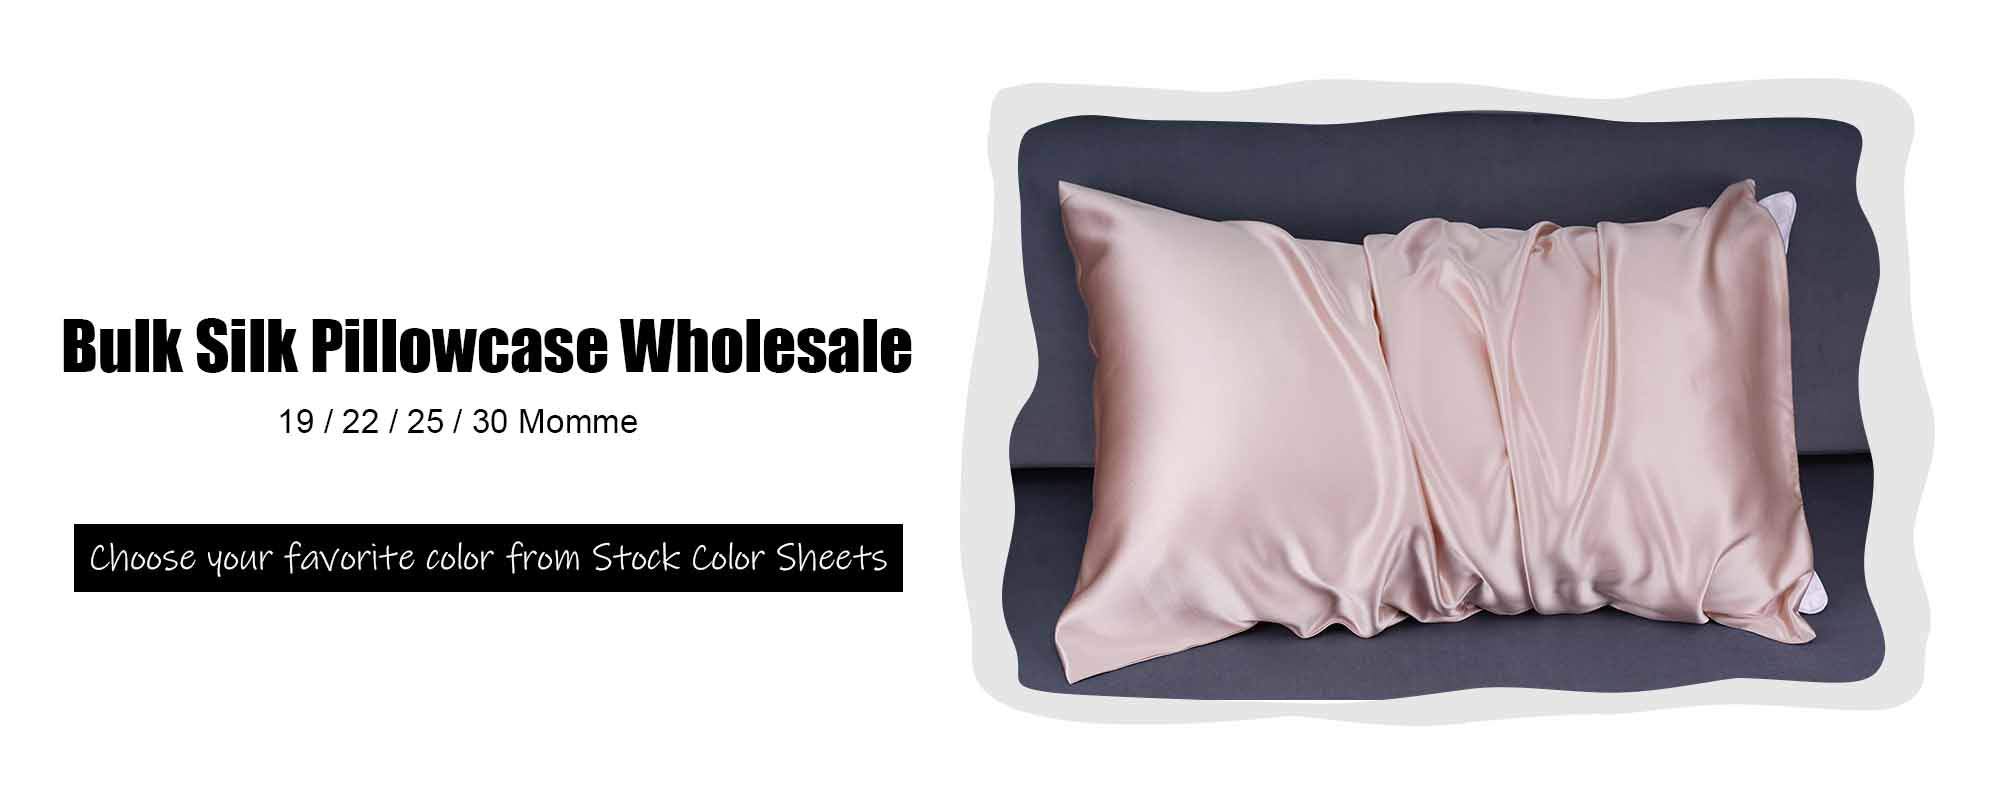 Bulk Silk Pillowcase wholesale